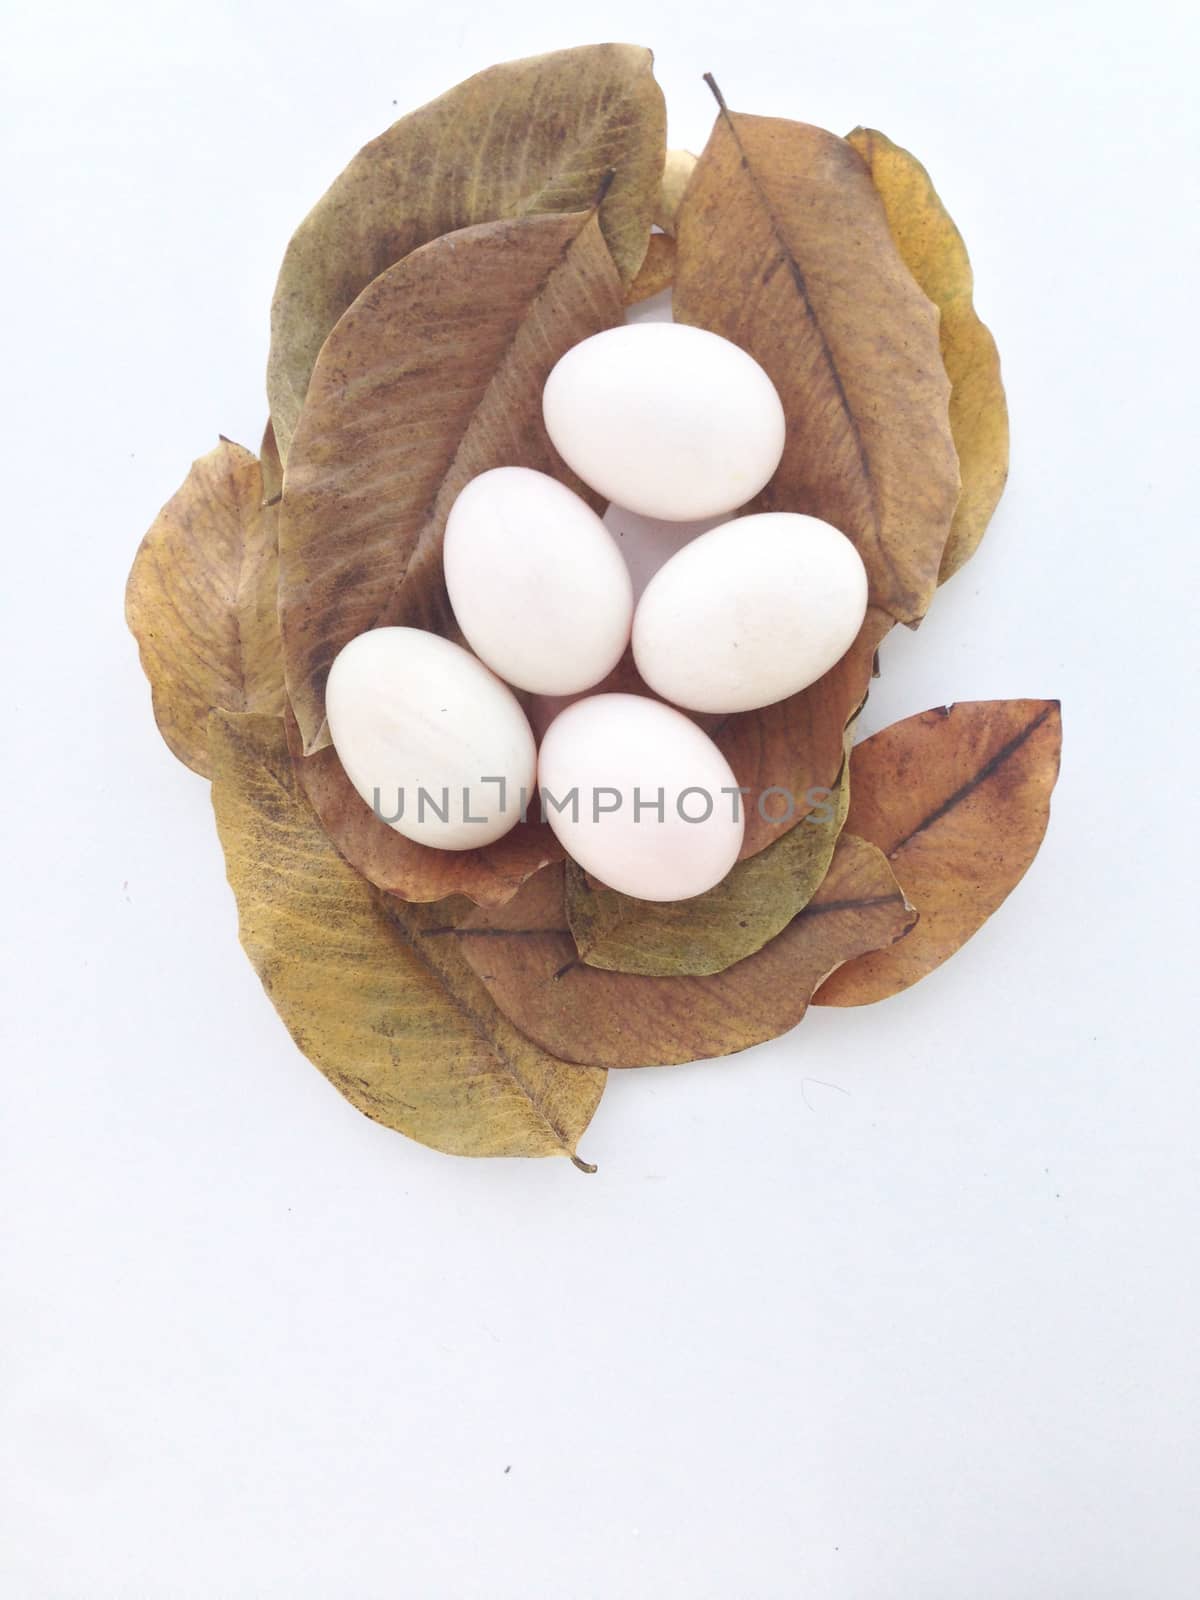 duck eggs on dry leaves by Bowonpat